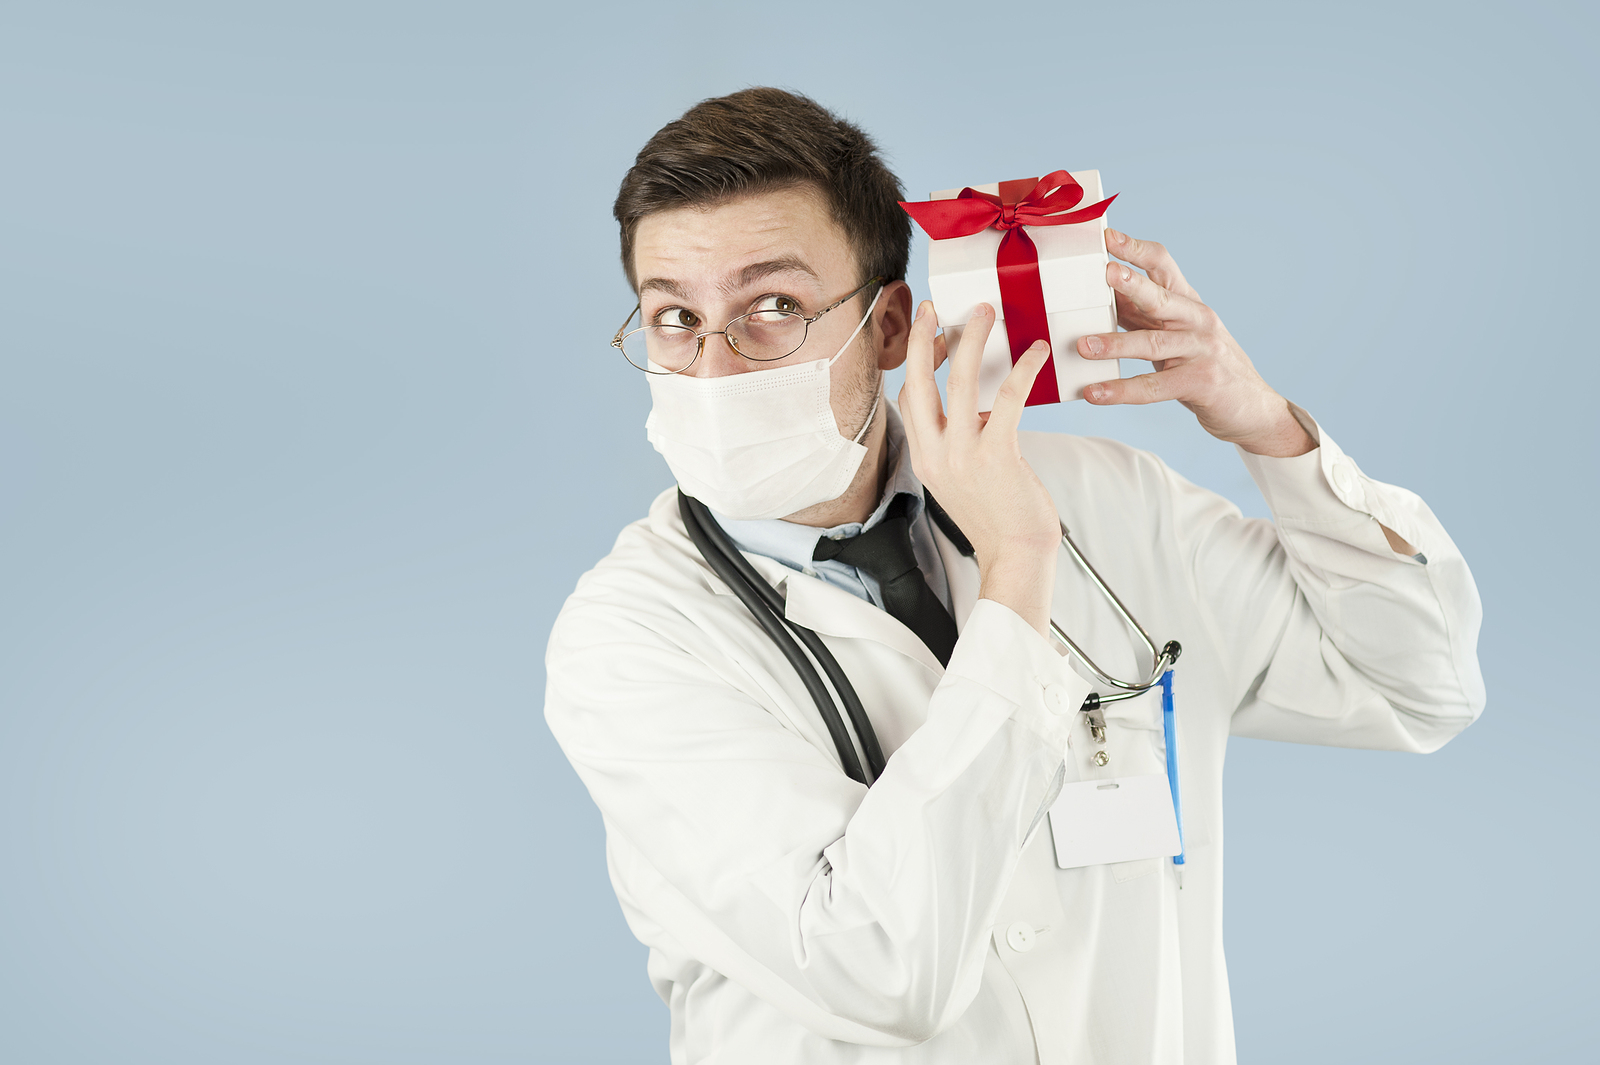 heathcare gift ideas for holiday health